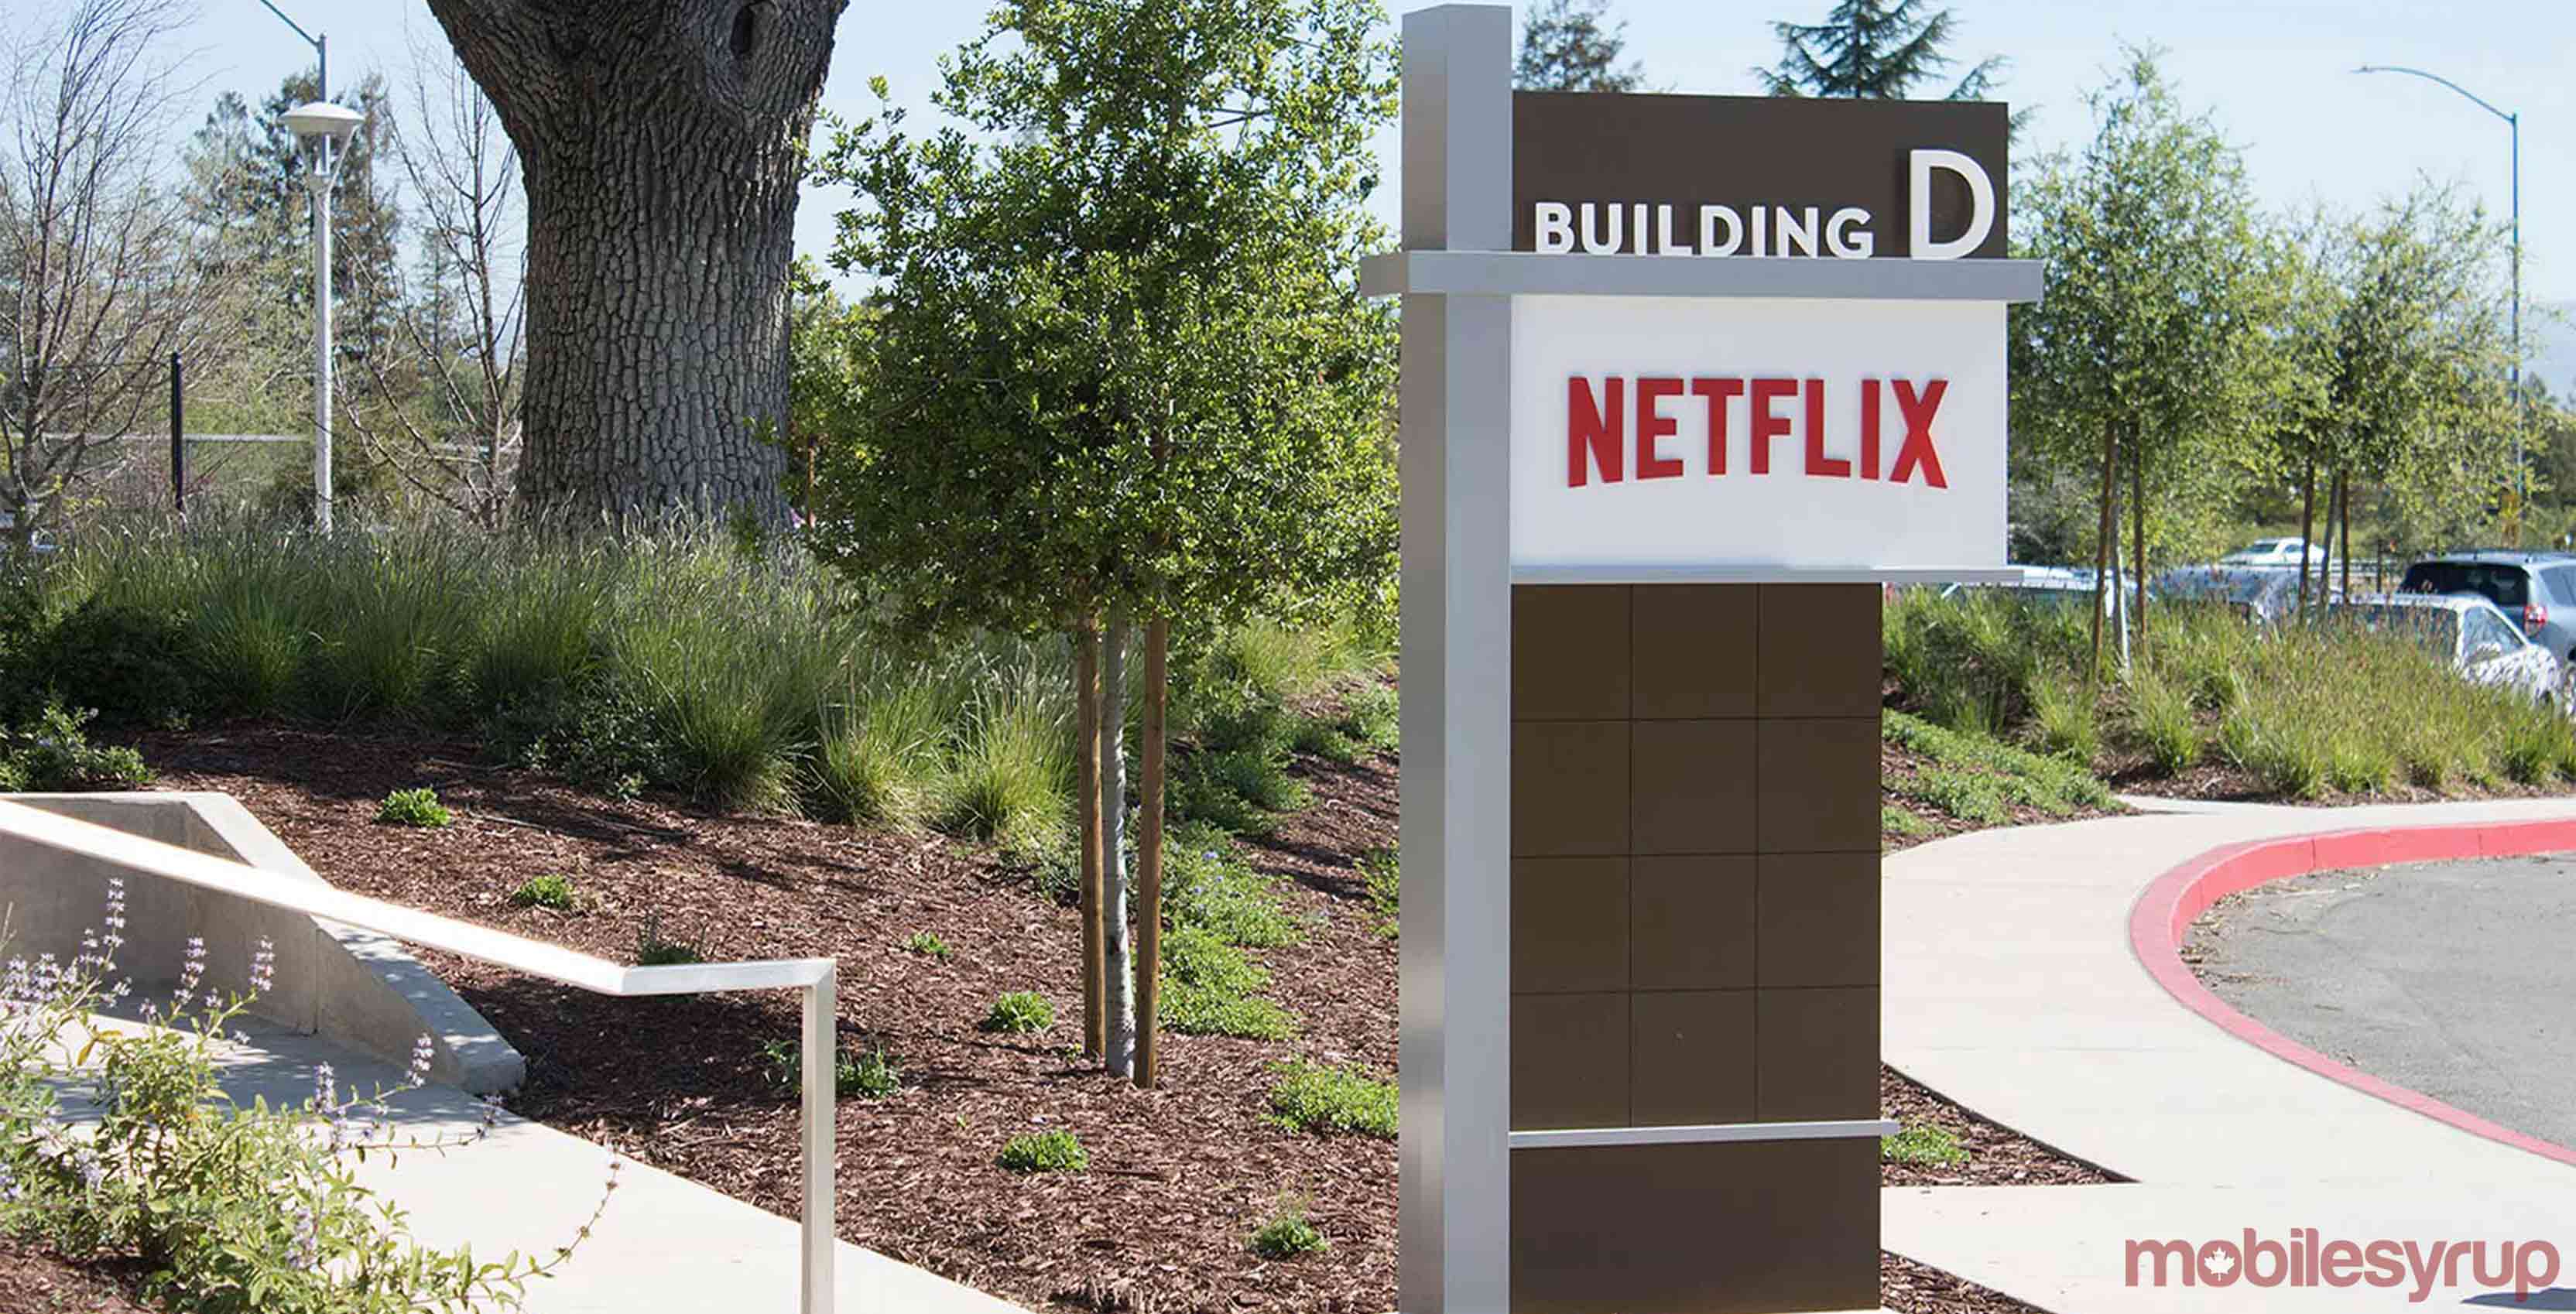 Netflix building D